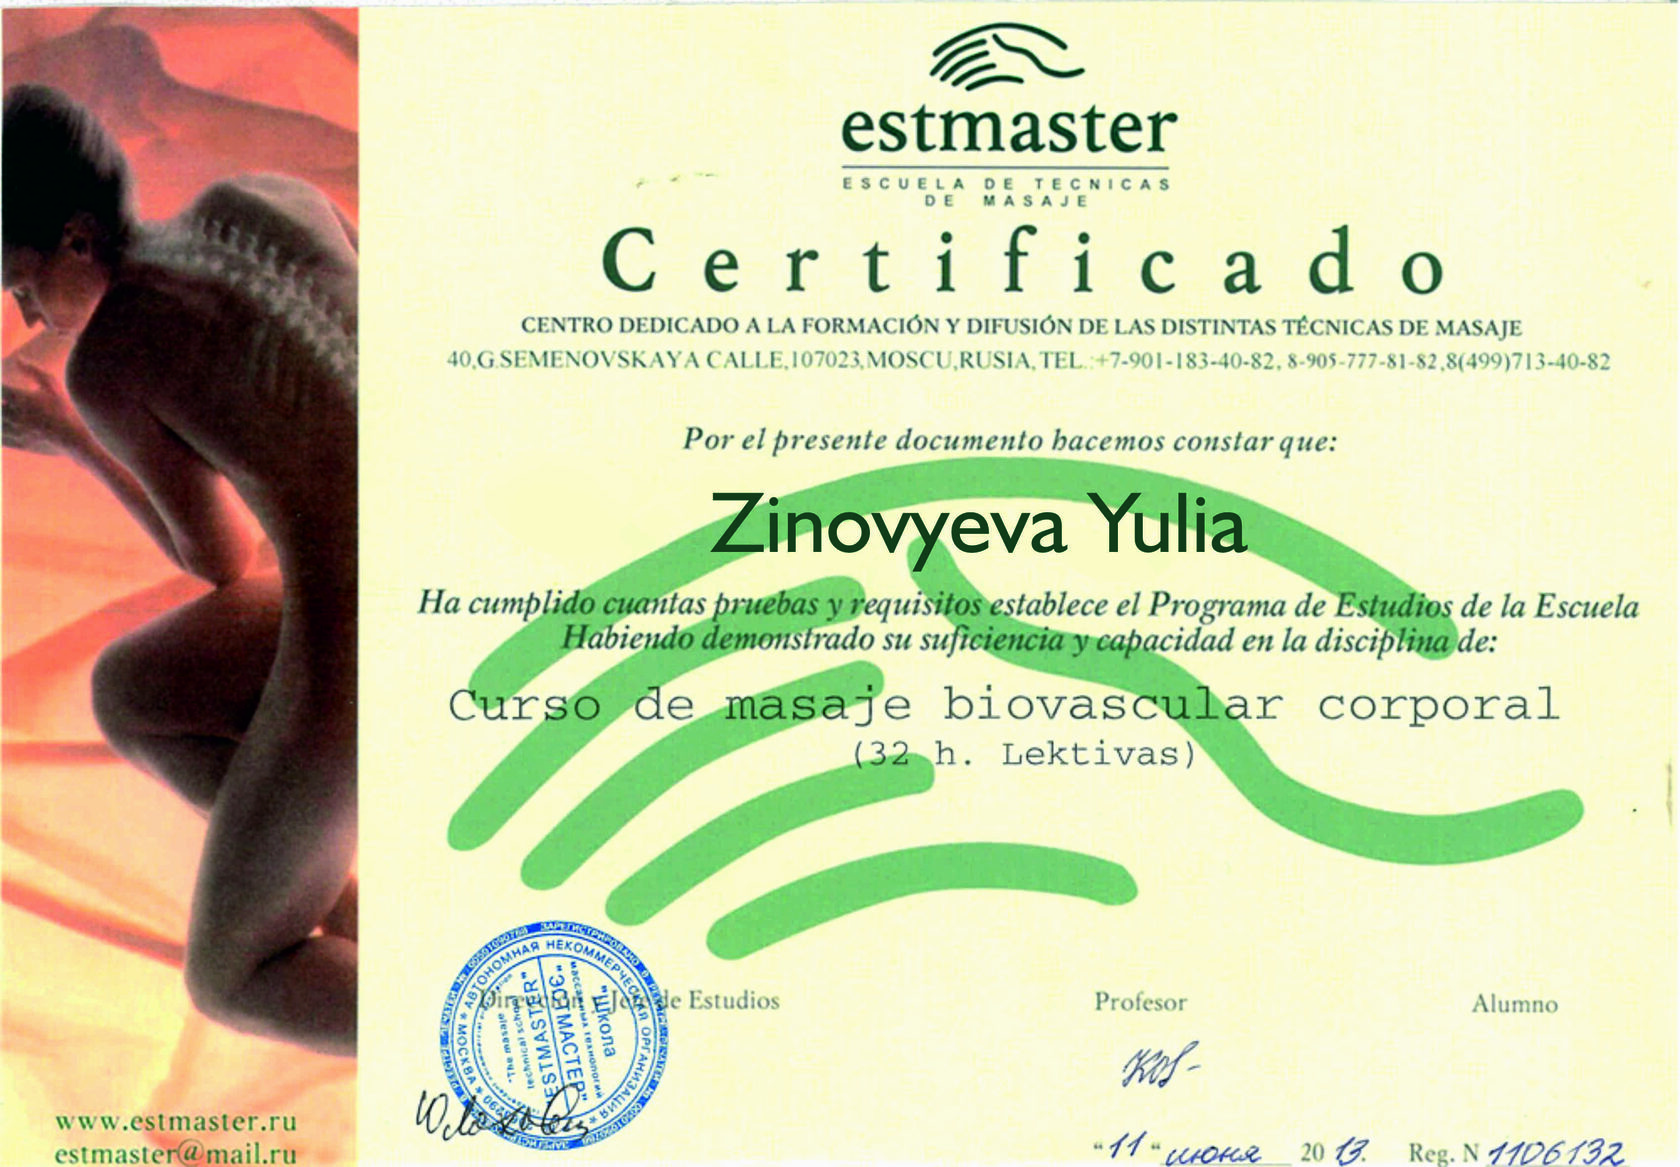 Юлем мастер. Face Master сертификат. "Face Master" - Юлии Зиновьевой.сертификата. Sertificate или Certificate. Head of ITF with face Master License.